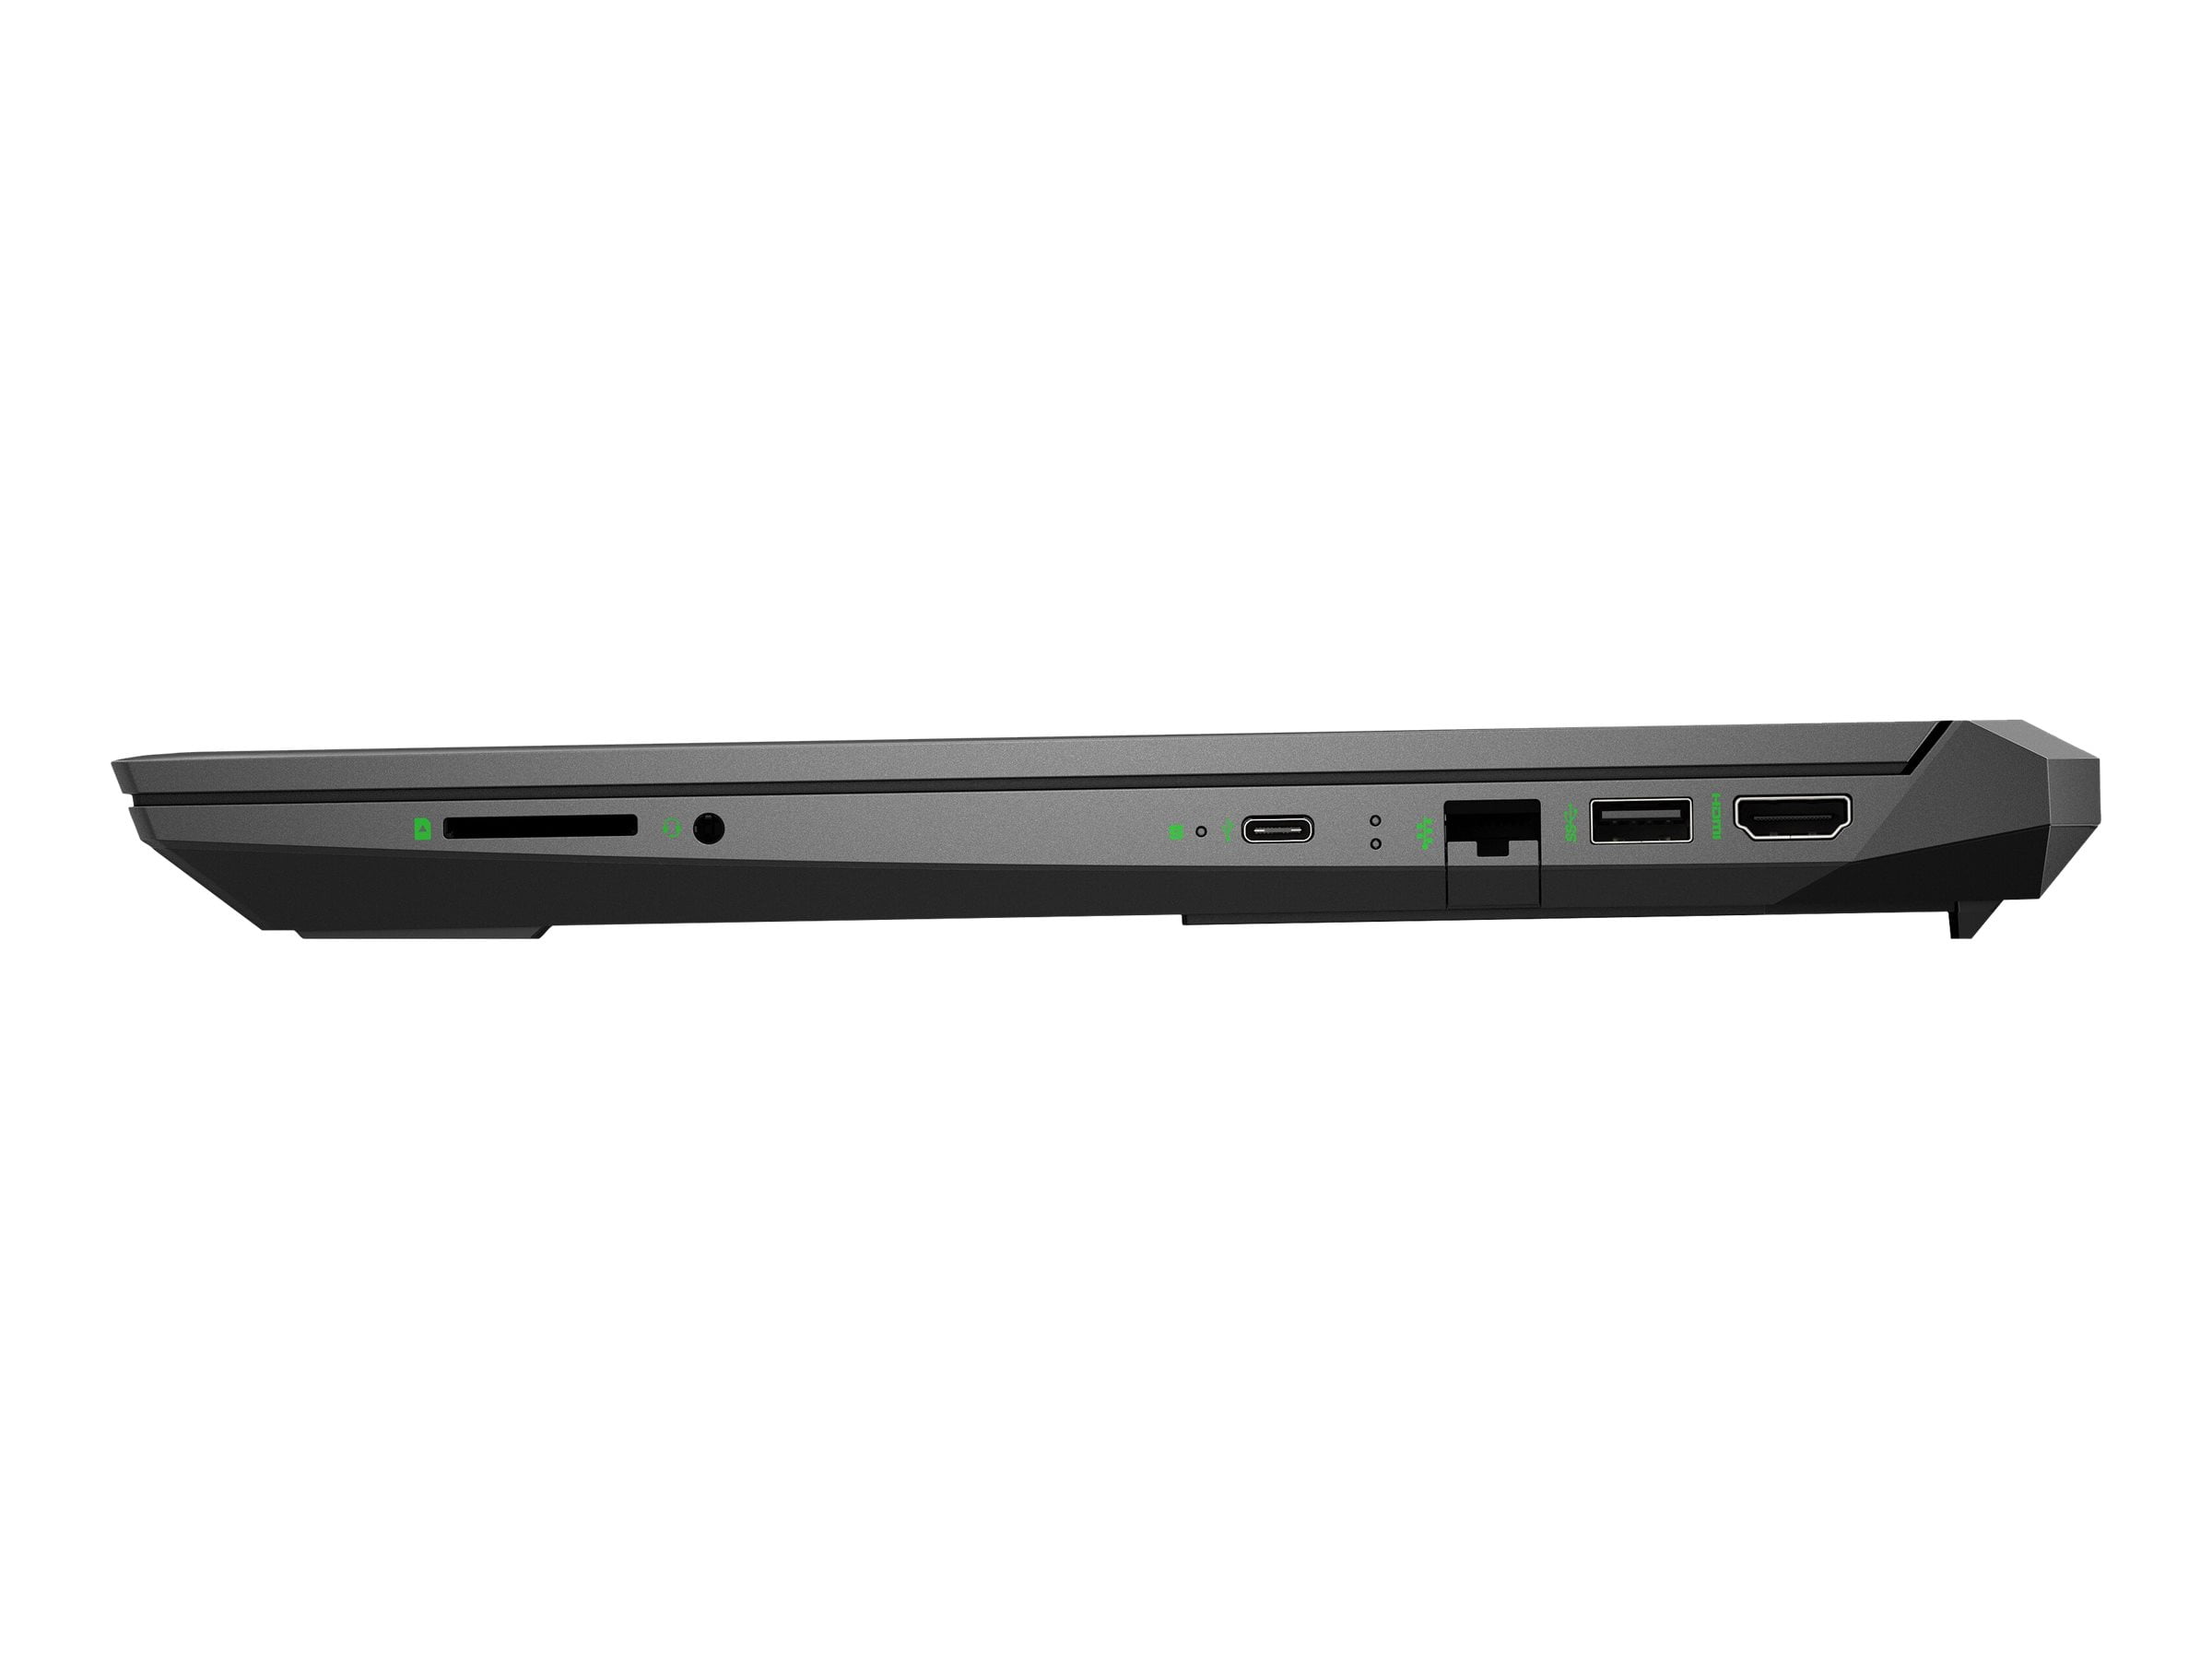 HP Pavilion Gaming Laptop 15-ec0013dx - AMD Ryzen 5 3550H / 2.1 GHz - Win  10 Home 64-bit - GF GTX 1050 - 8 GB RAM - 256 GB SSD NVMe - 15.6